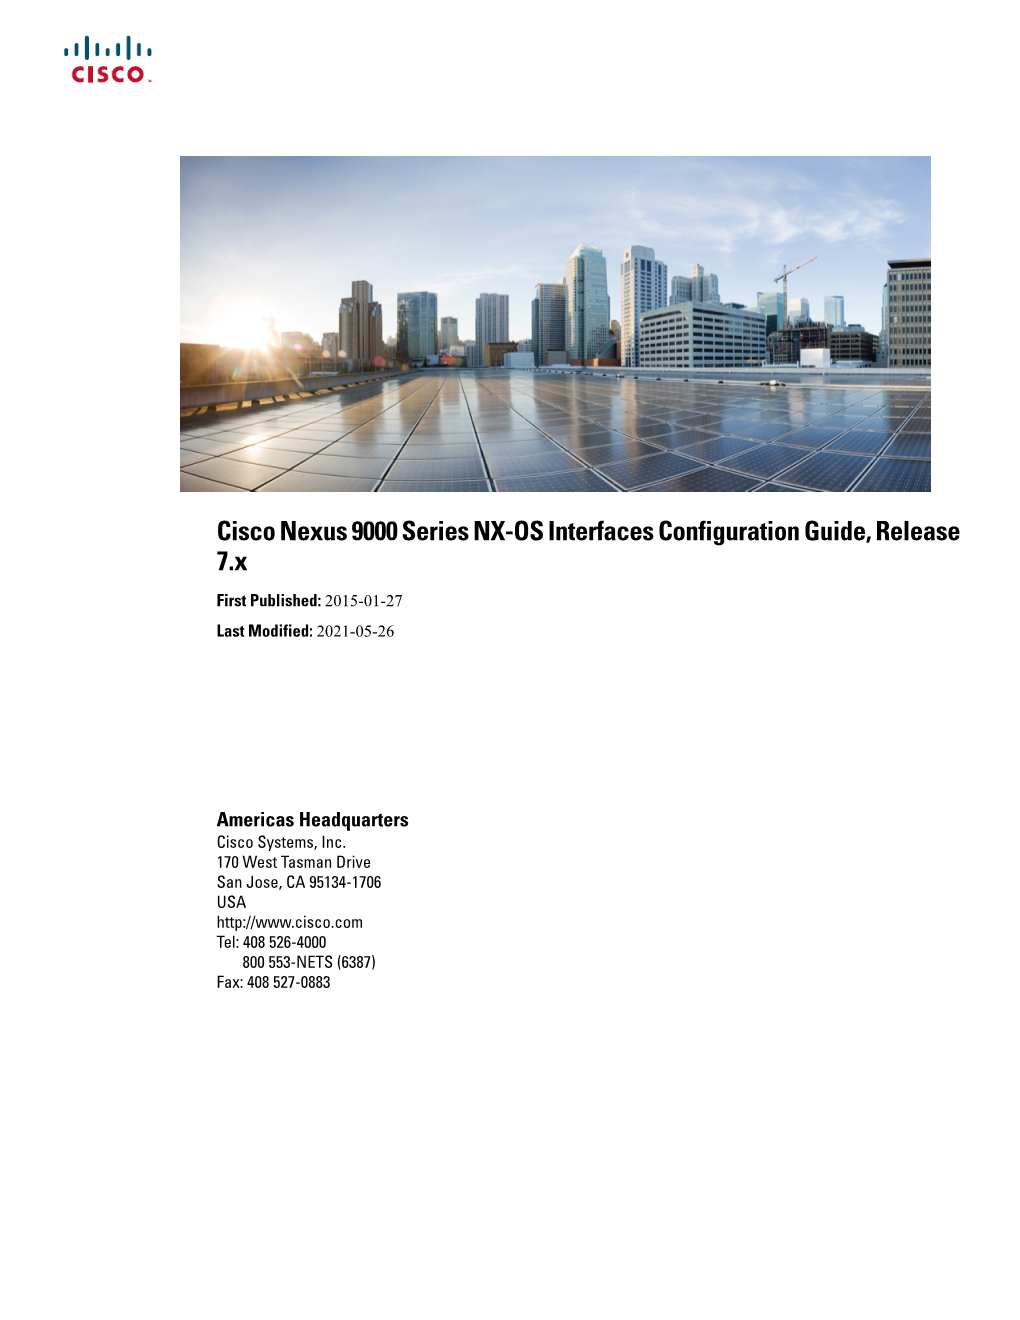 Cisco Nexus 9000 Series NX-OS Interfaces Configuration Guide, Release 7.X